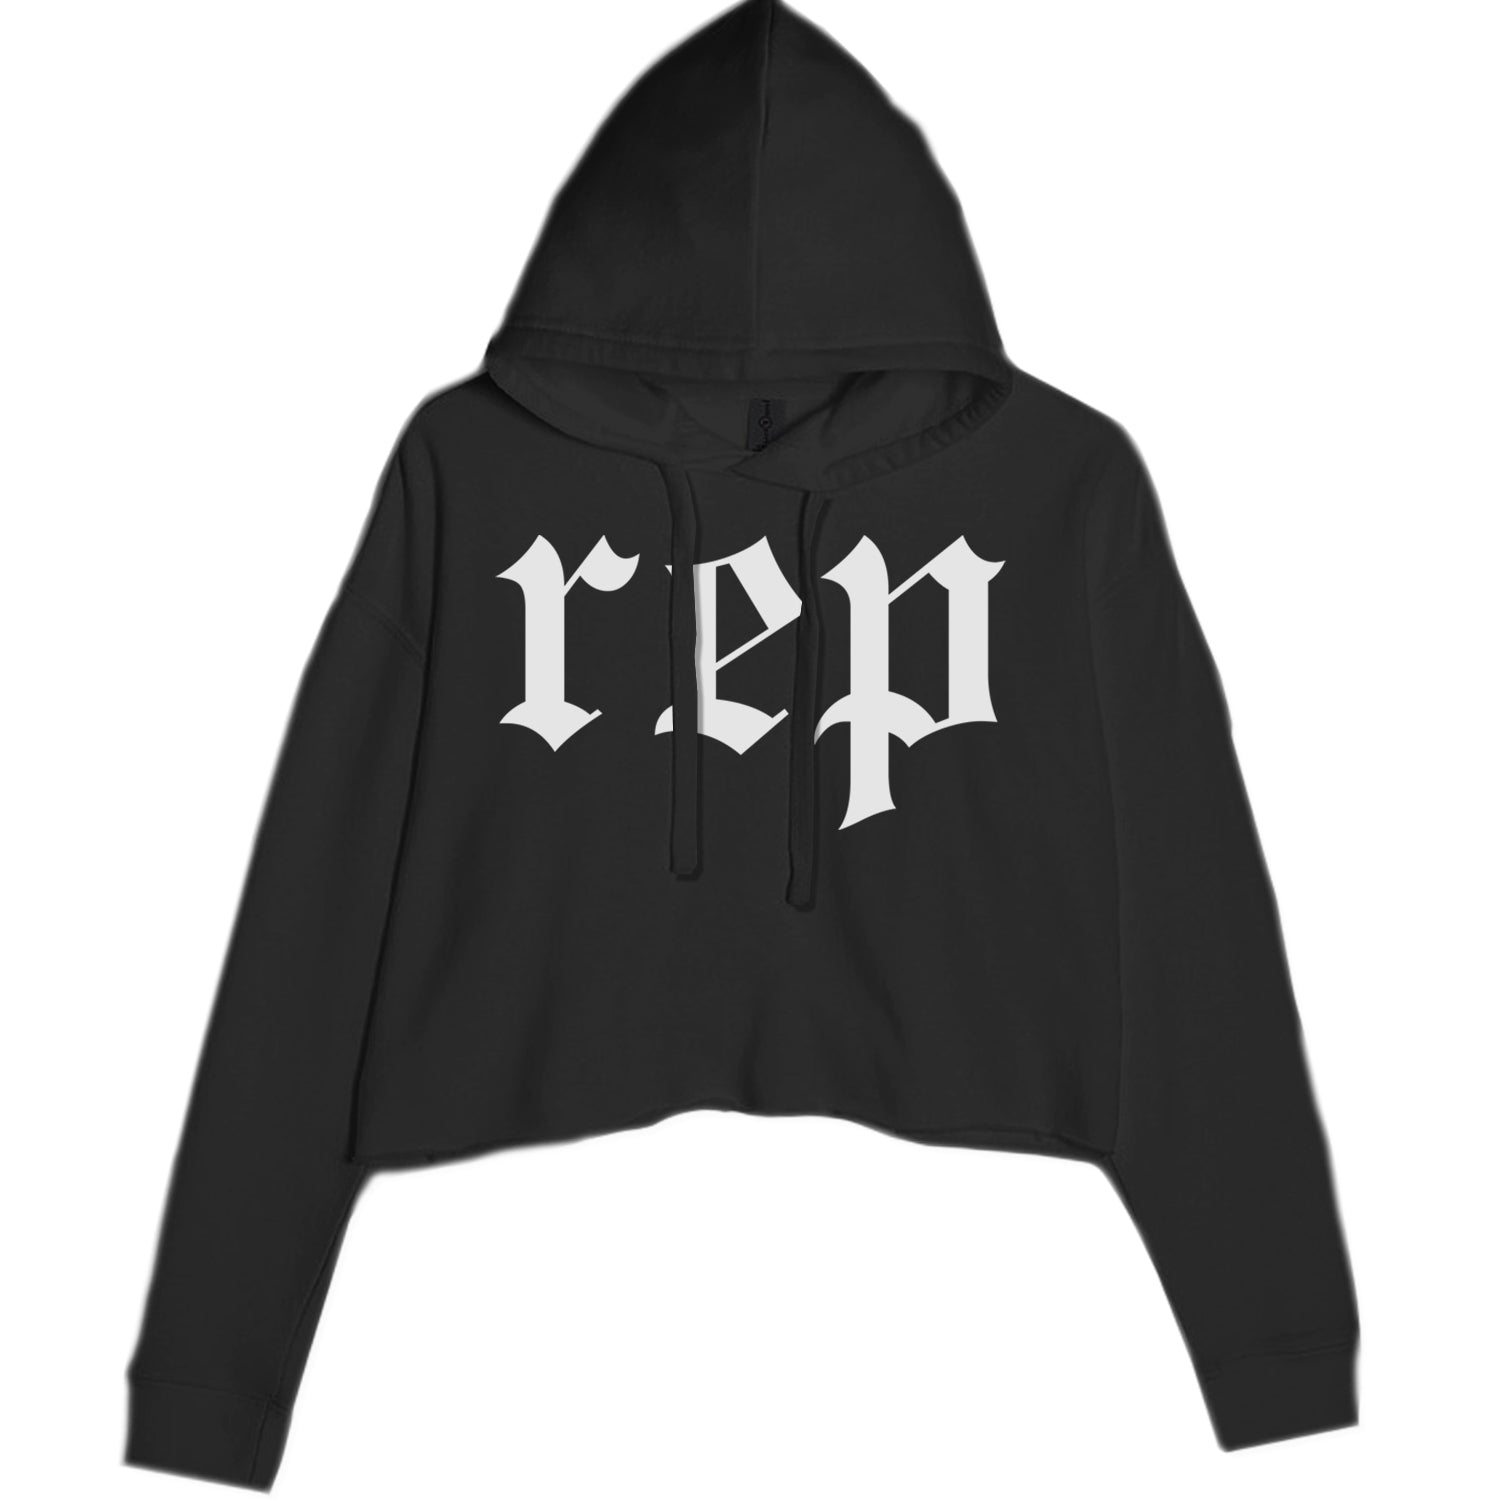 REP Reputation Eras Music Lover Gift Fan Favorite Cropped Hoodie Sweatshirt Black